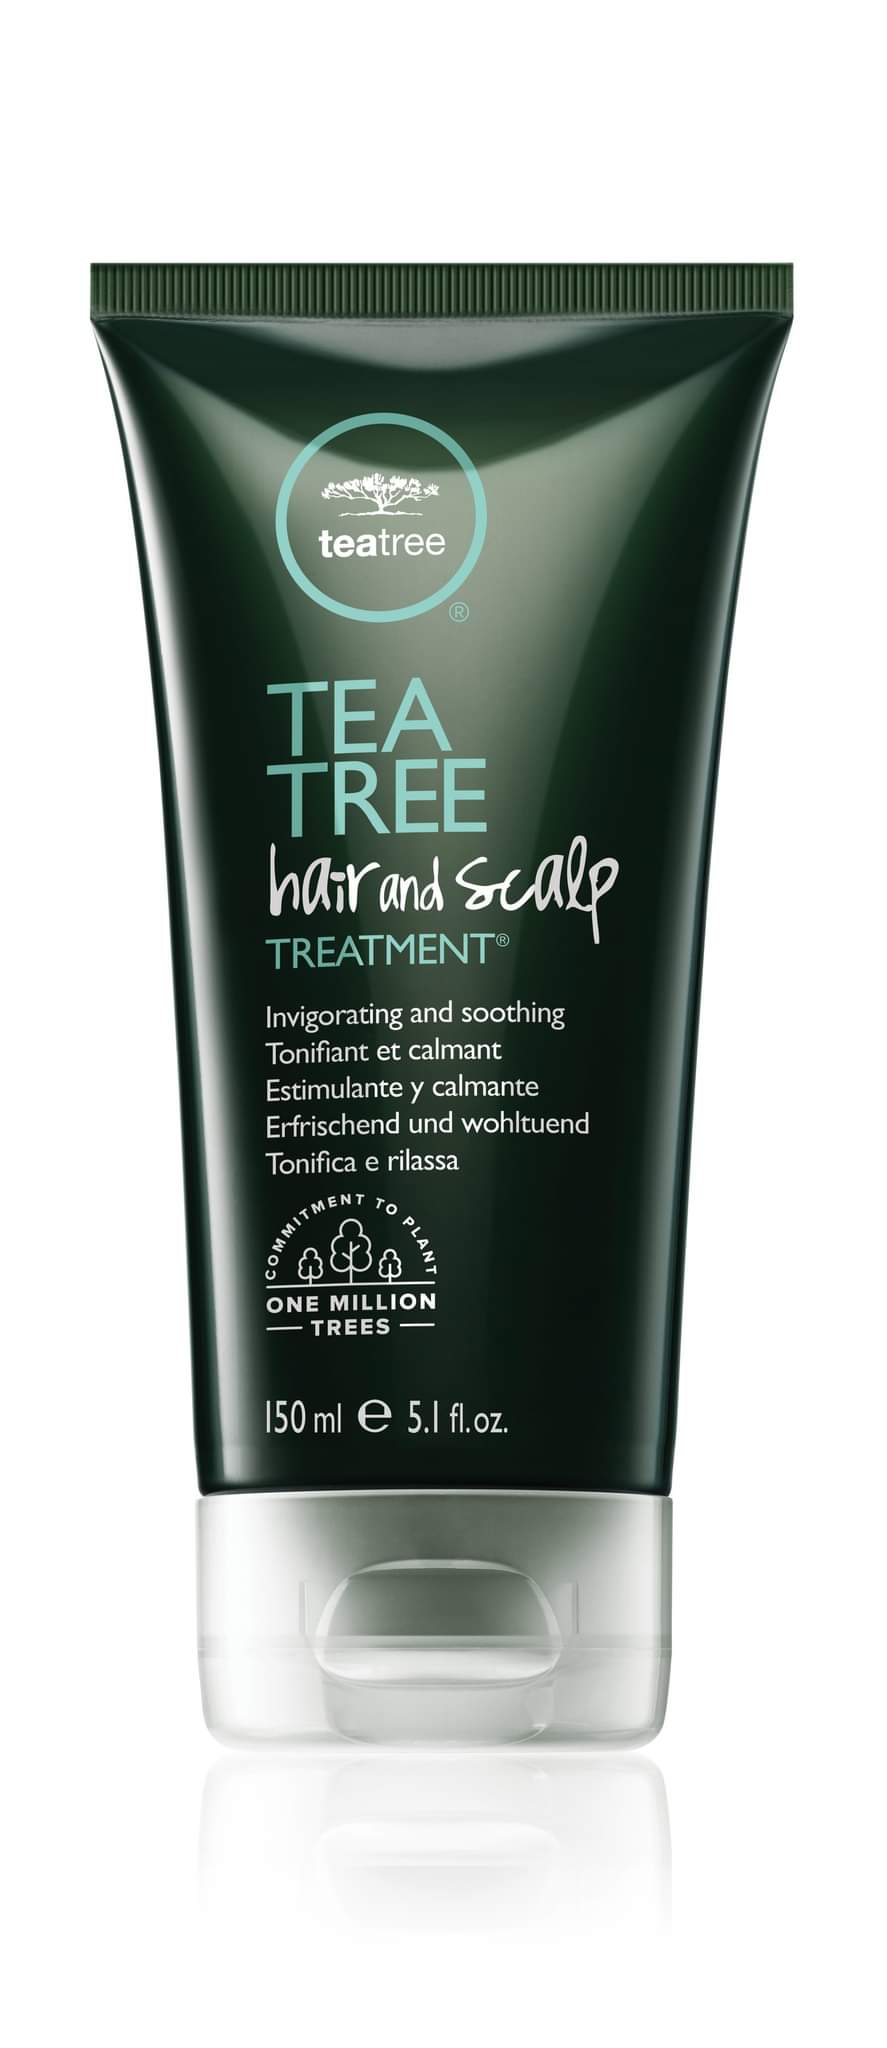 Tea Tree Special Hair And Scalp Treatment® obsah (ml): 150ml